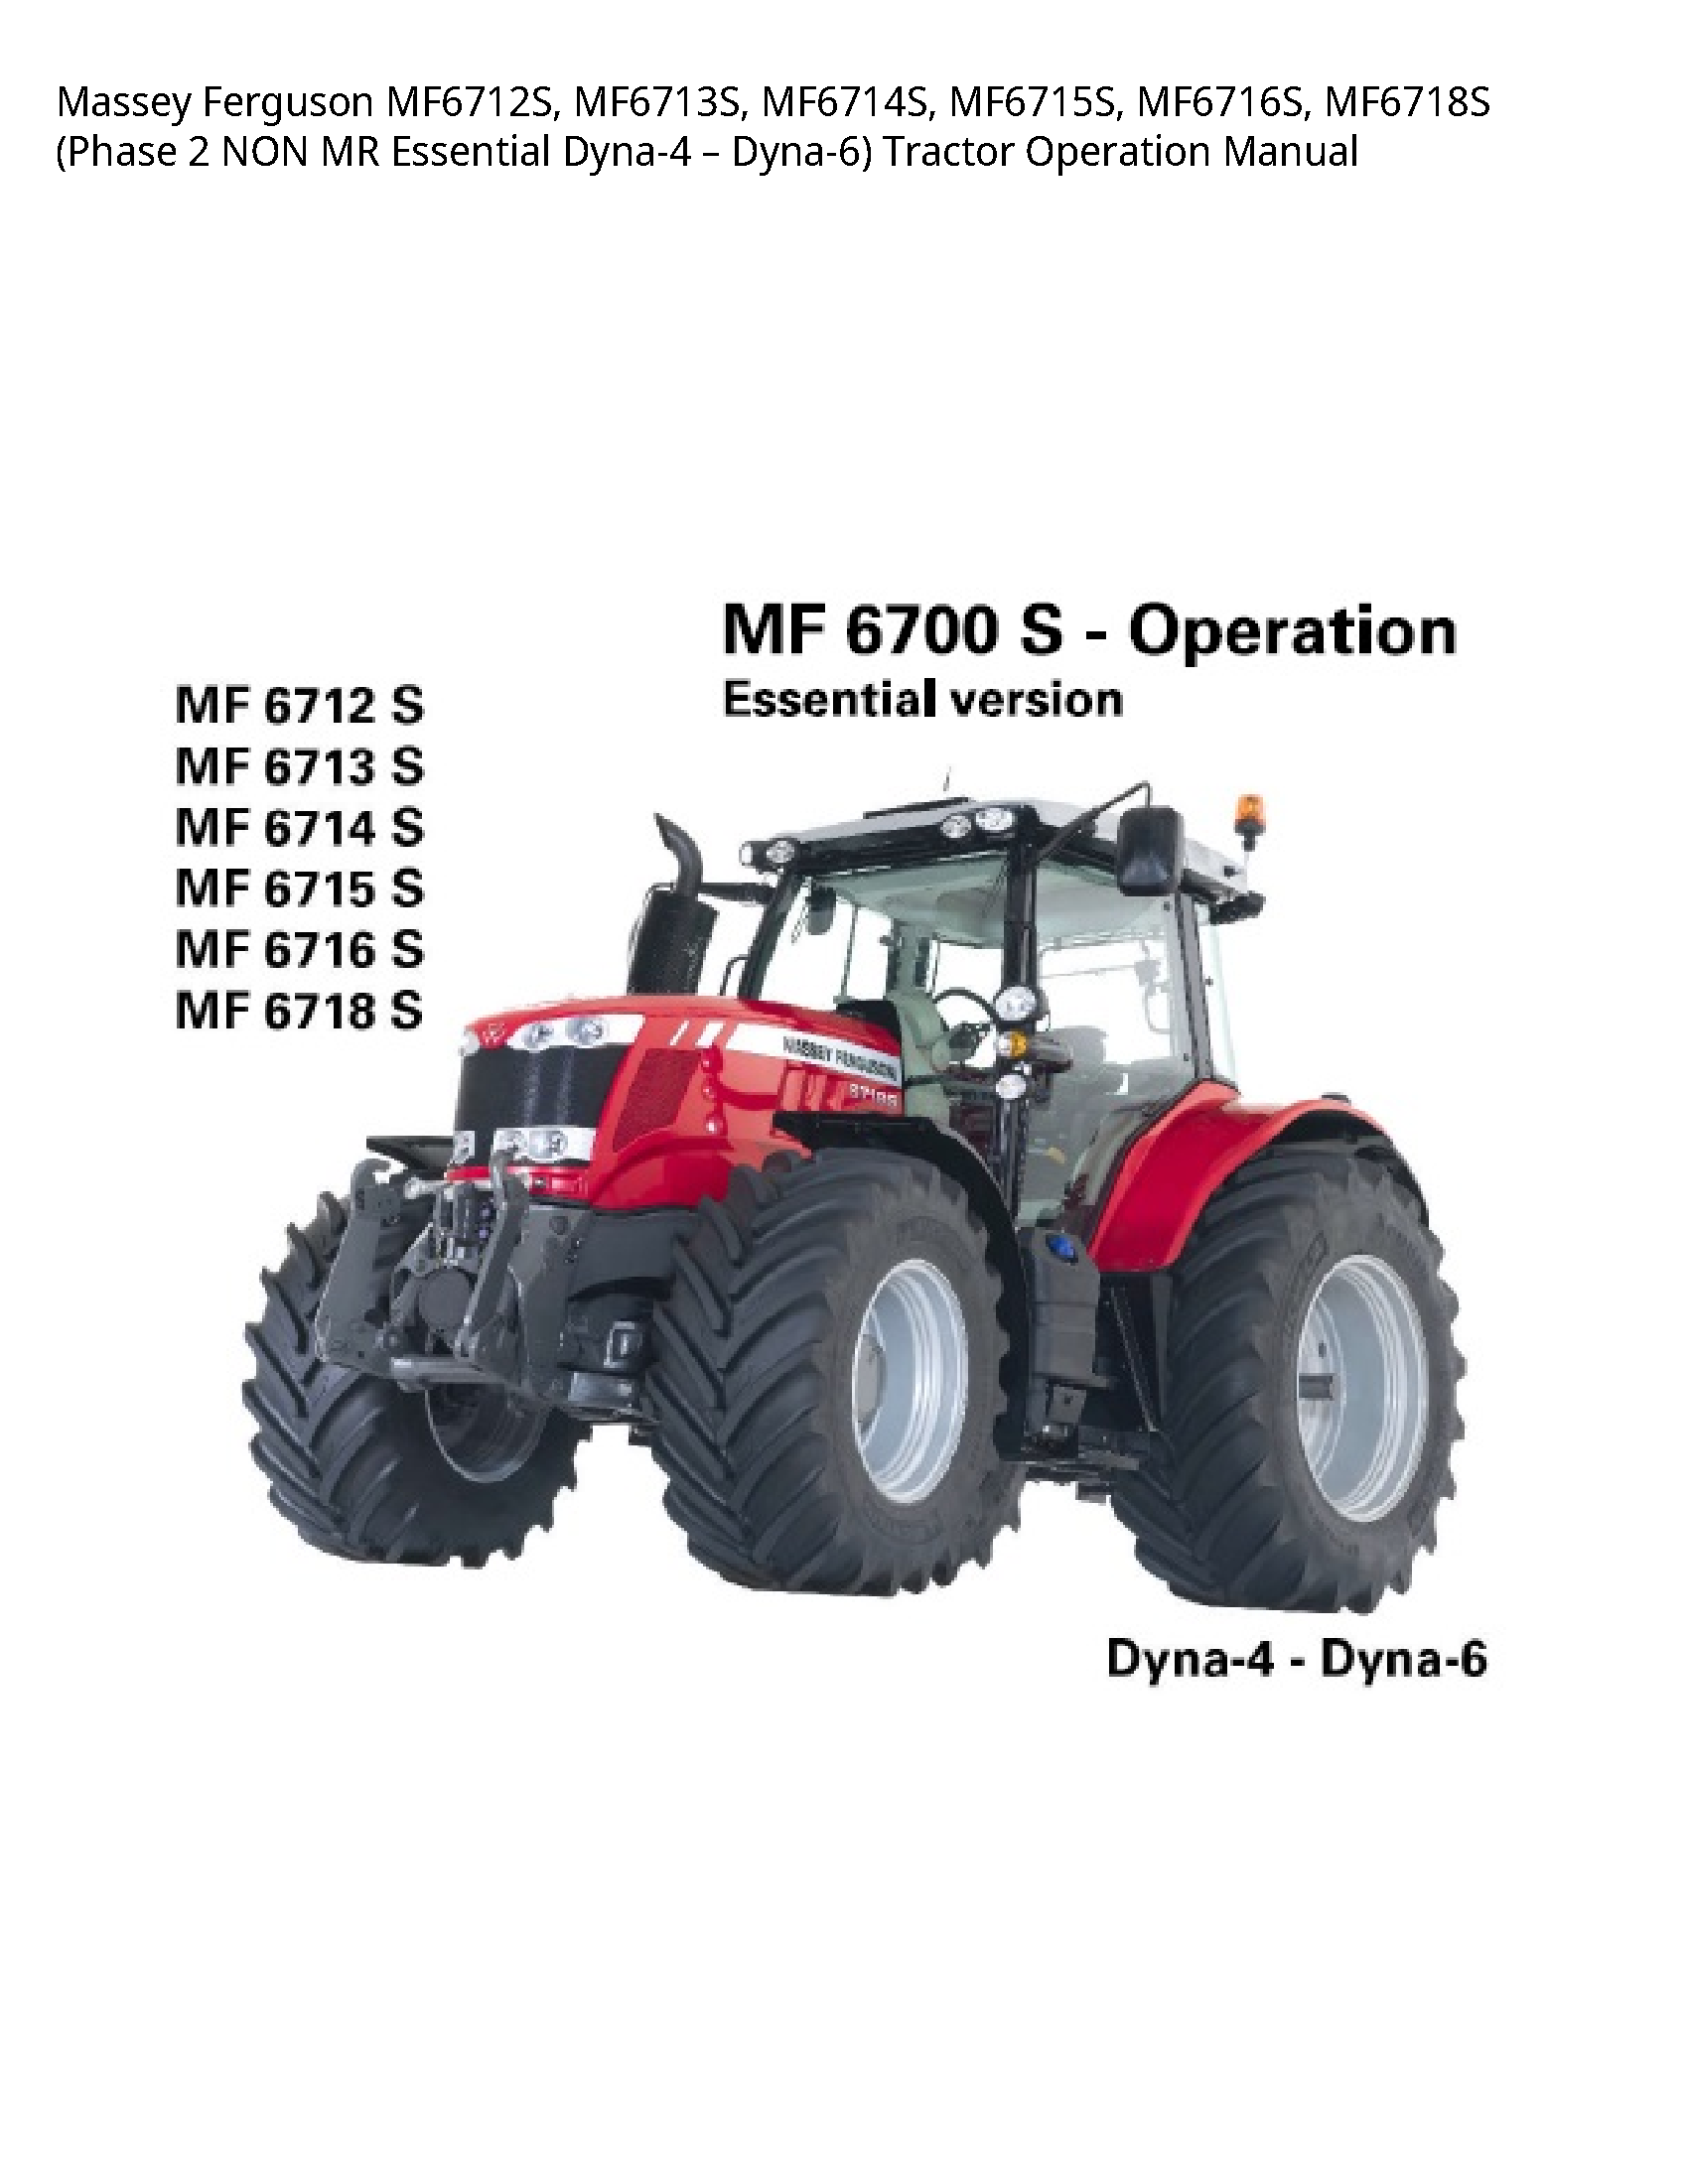 Massey Ferguson MF6712S (Phase NON MR Essential Tractor Operation manual